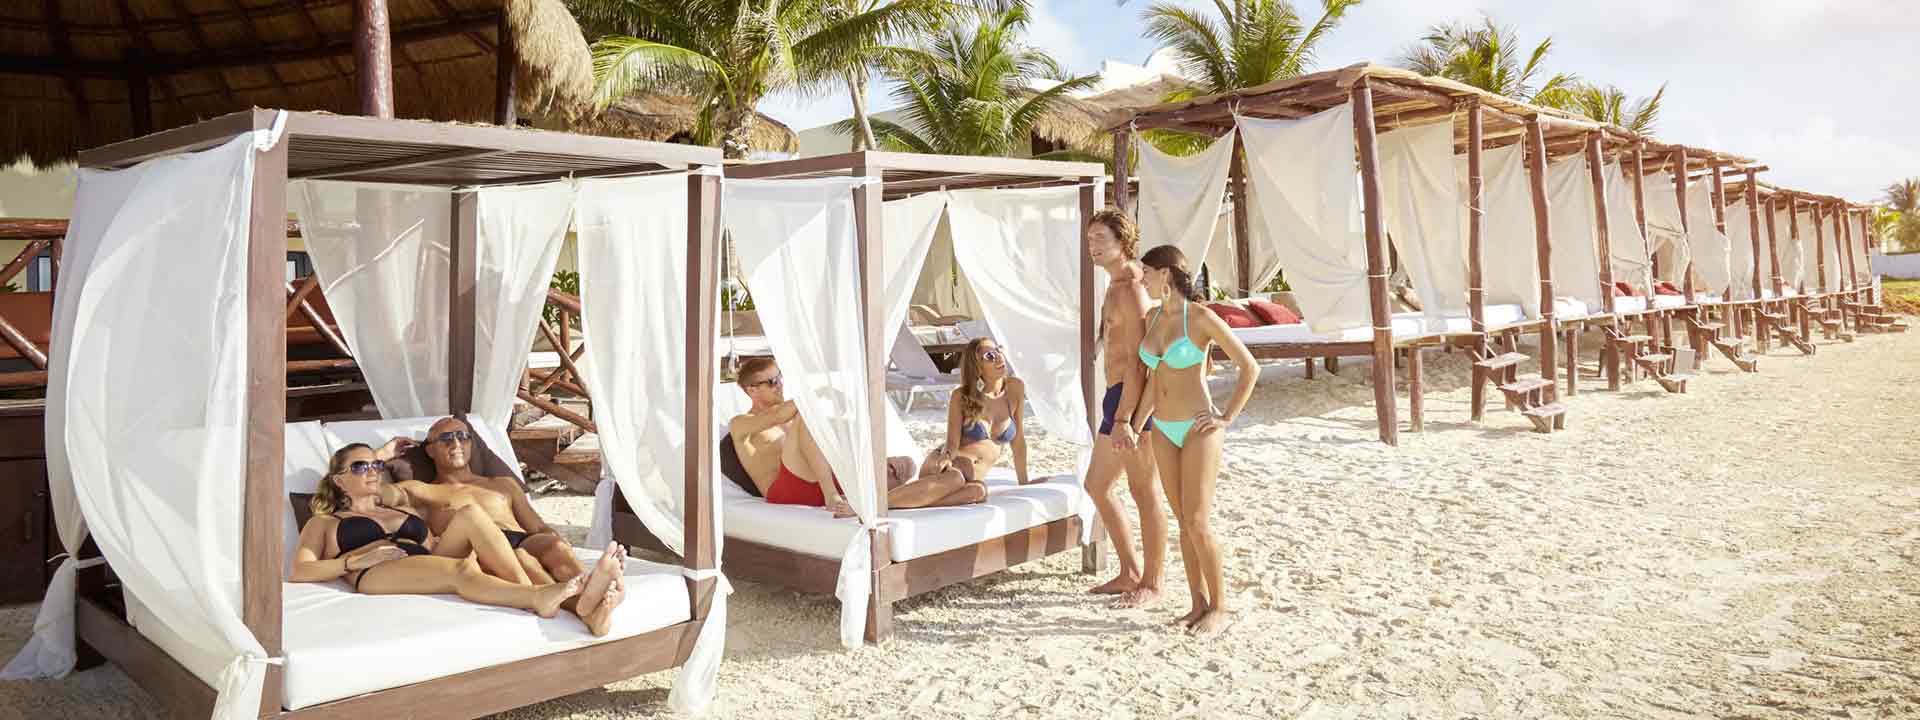 Desire Resort Riviera Maya Beach Beds. beach beds for just relaxing at Desi...